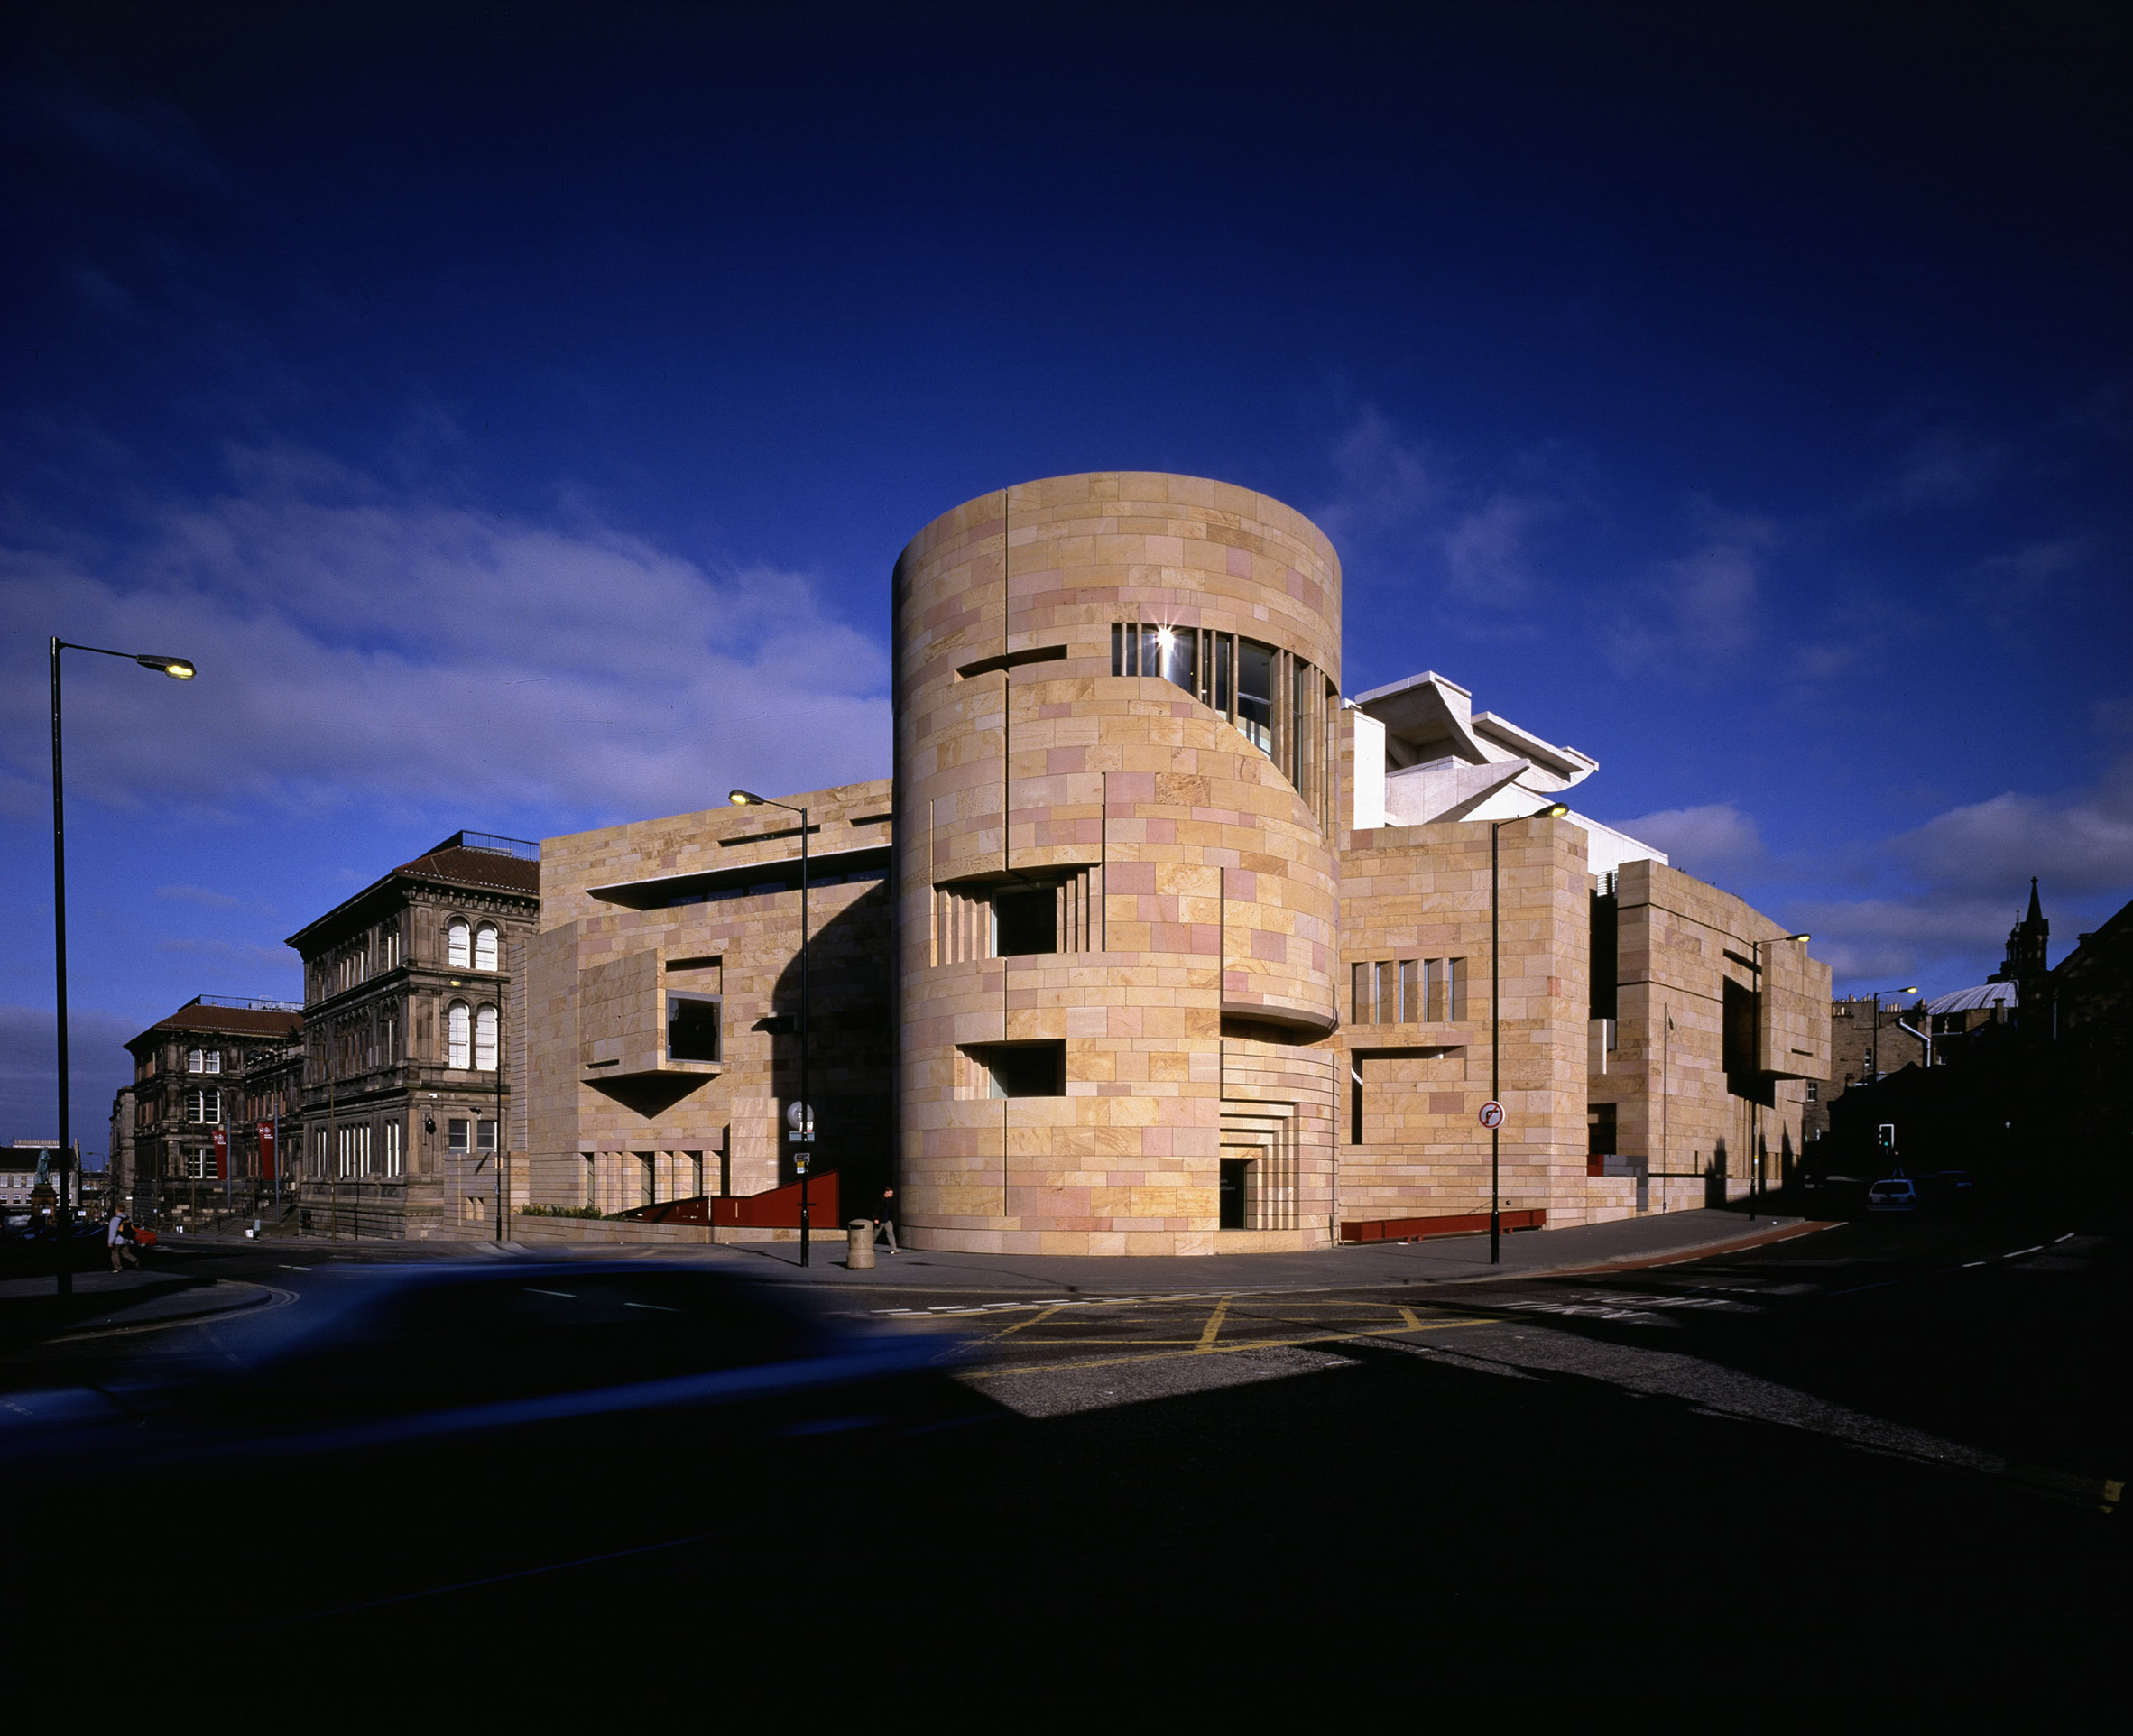 Museum of Scotland